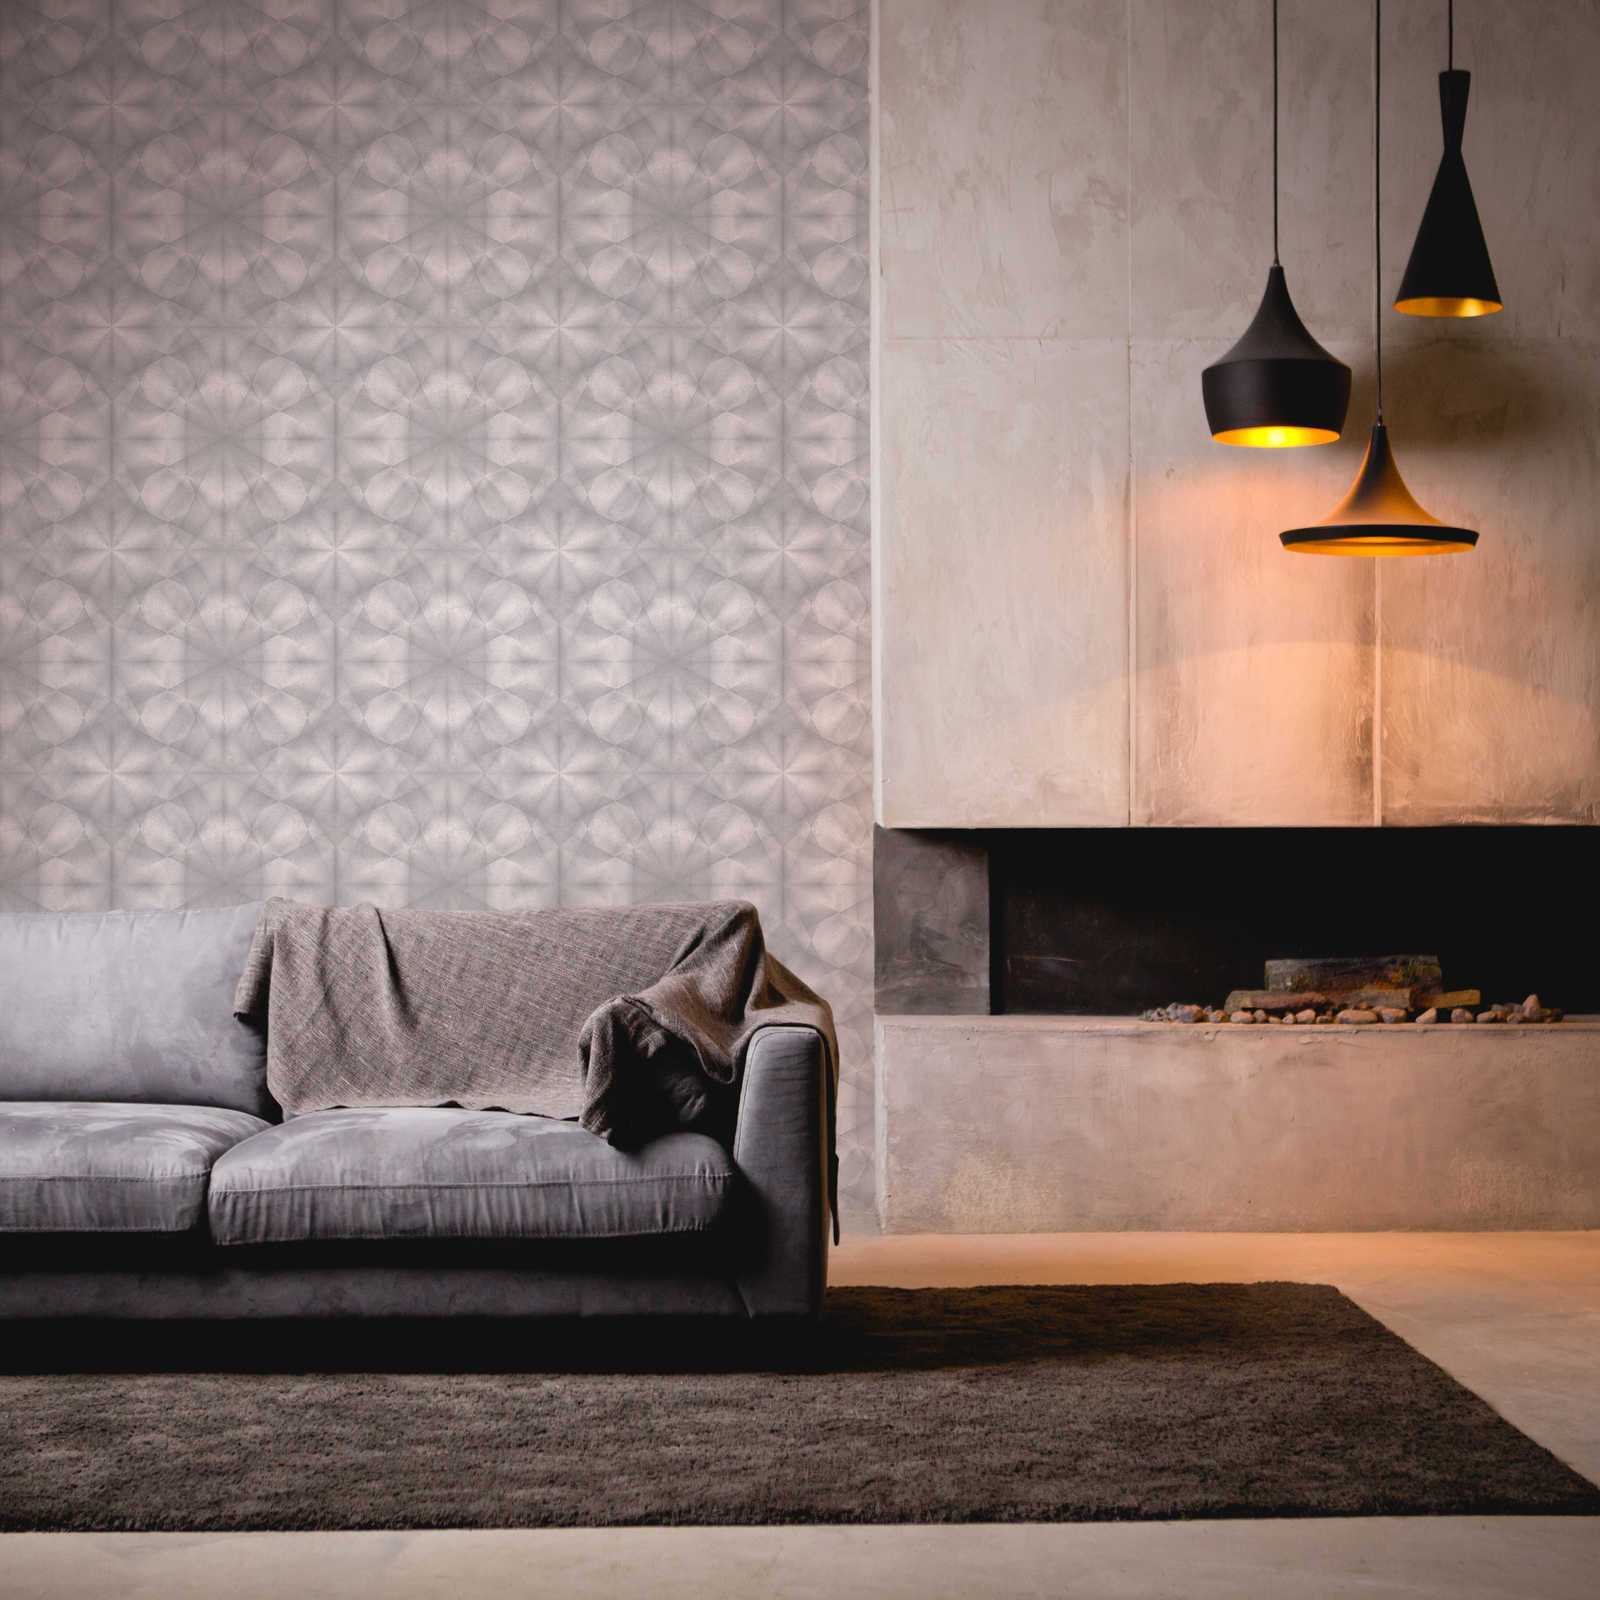             Grey wallpaper kaleidoscope pattern with 3D effect - grey, metallic
        